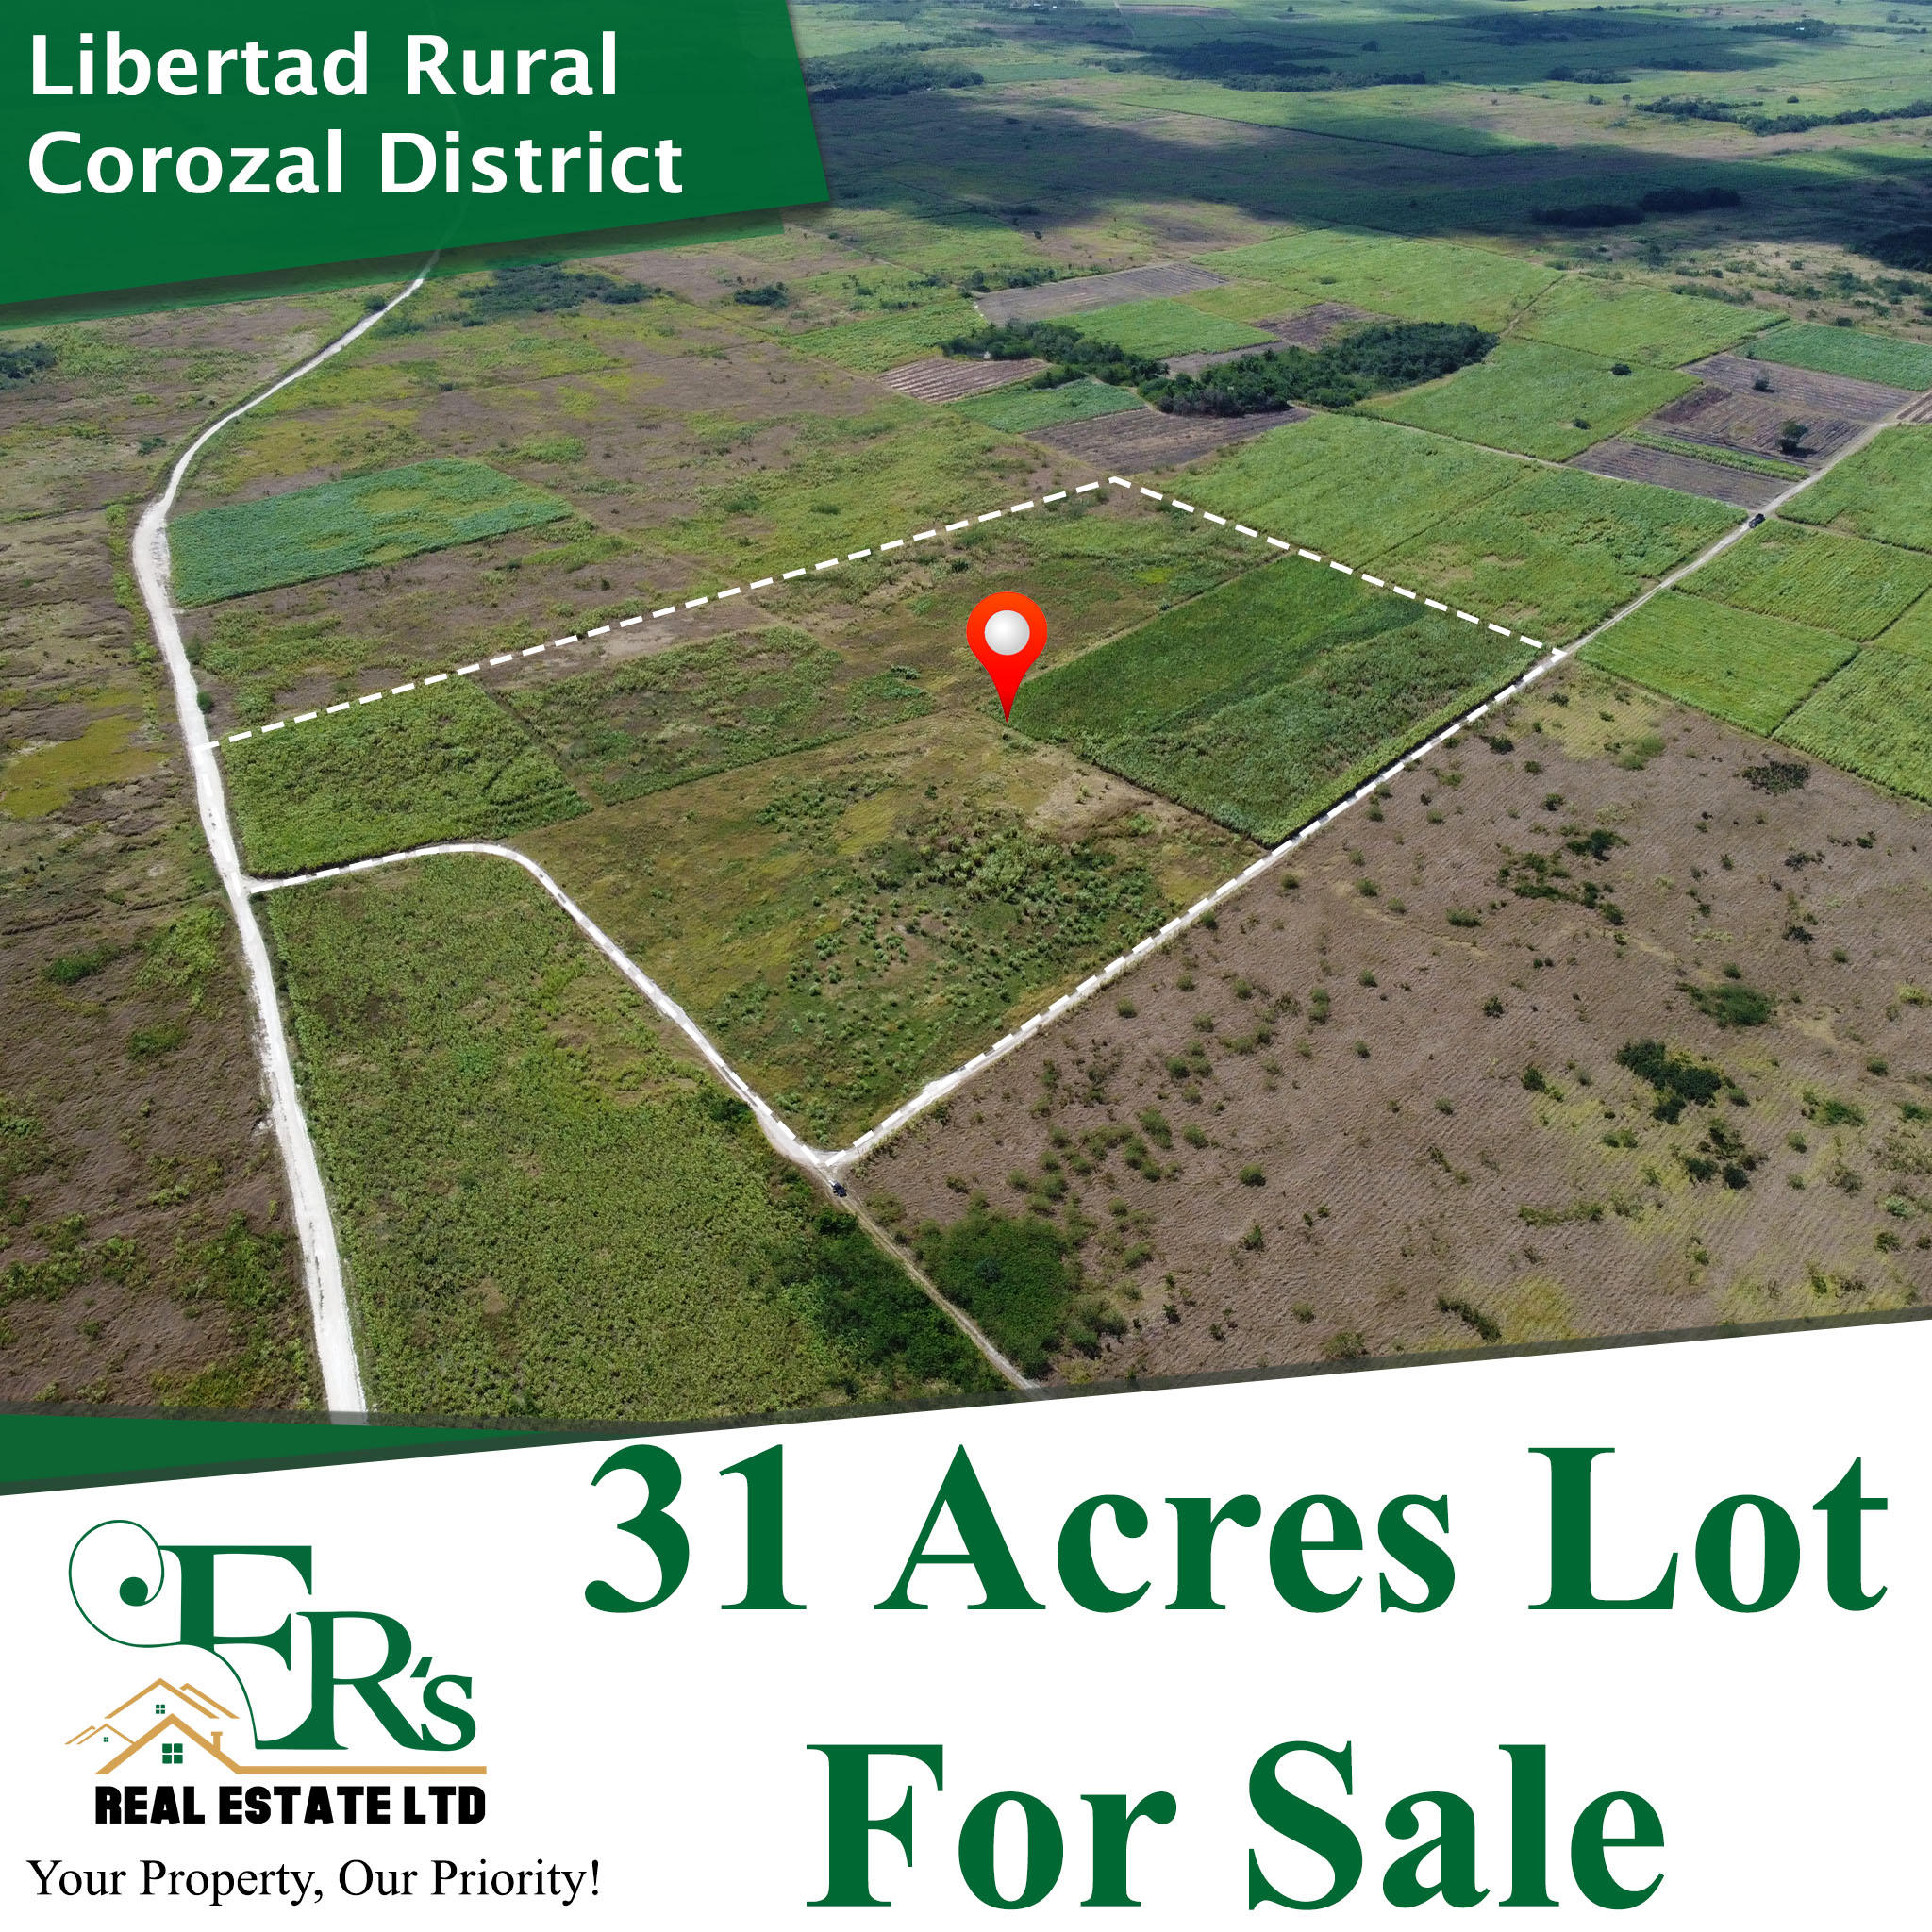 31 Acres Lot in Libertad Rural, Corozal